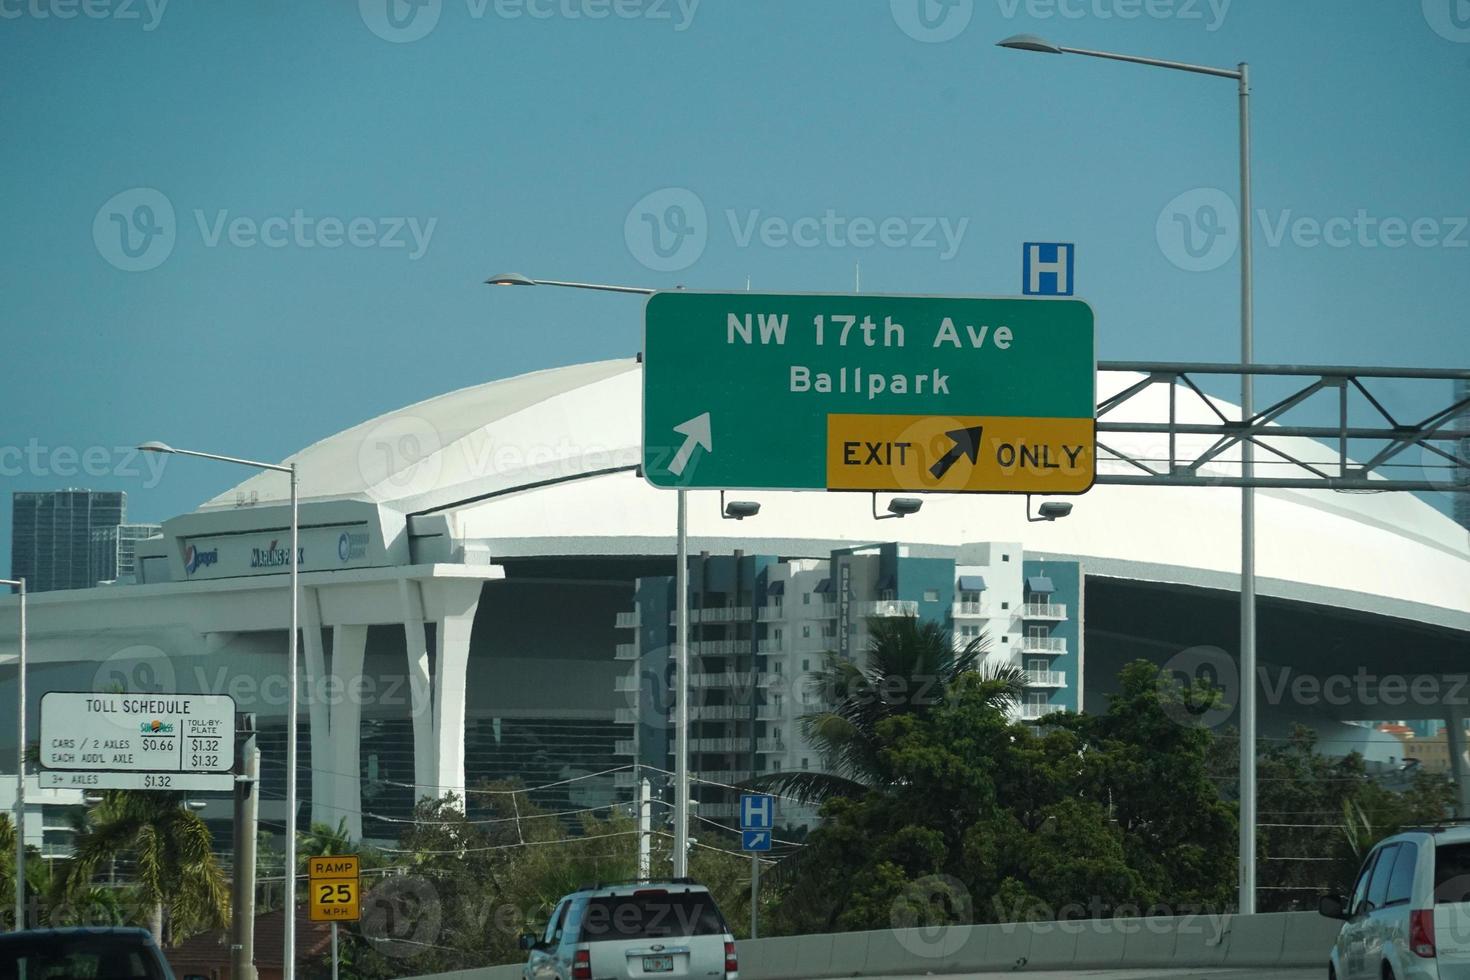 MIAMI, USA - NOVEMBER 5, 2018 - Miami Florida congested highways photo